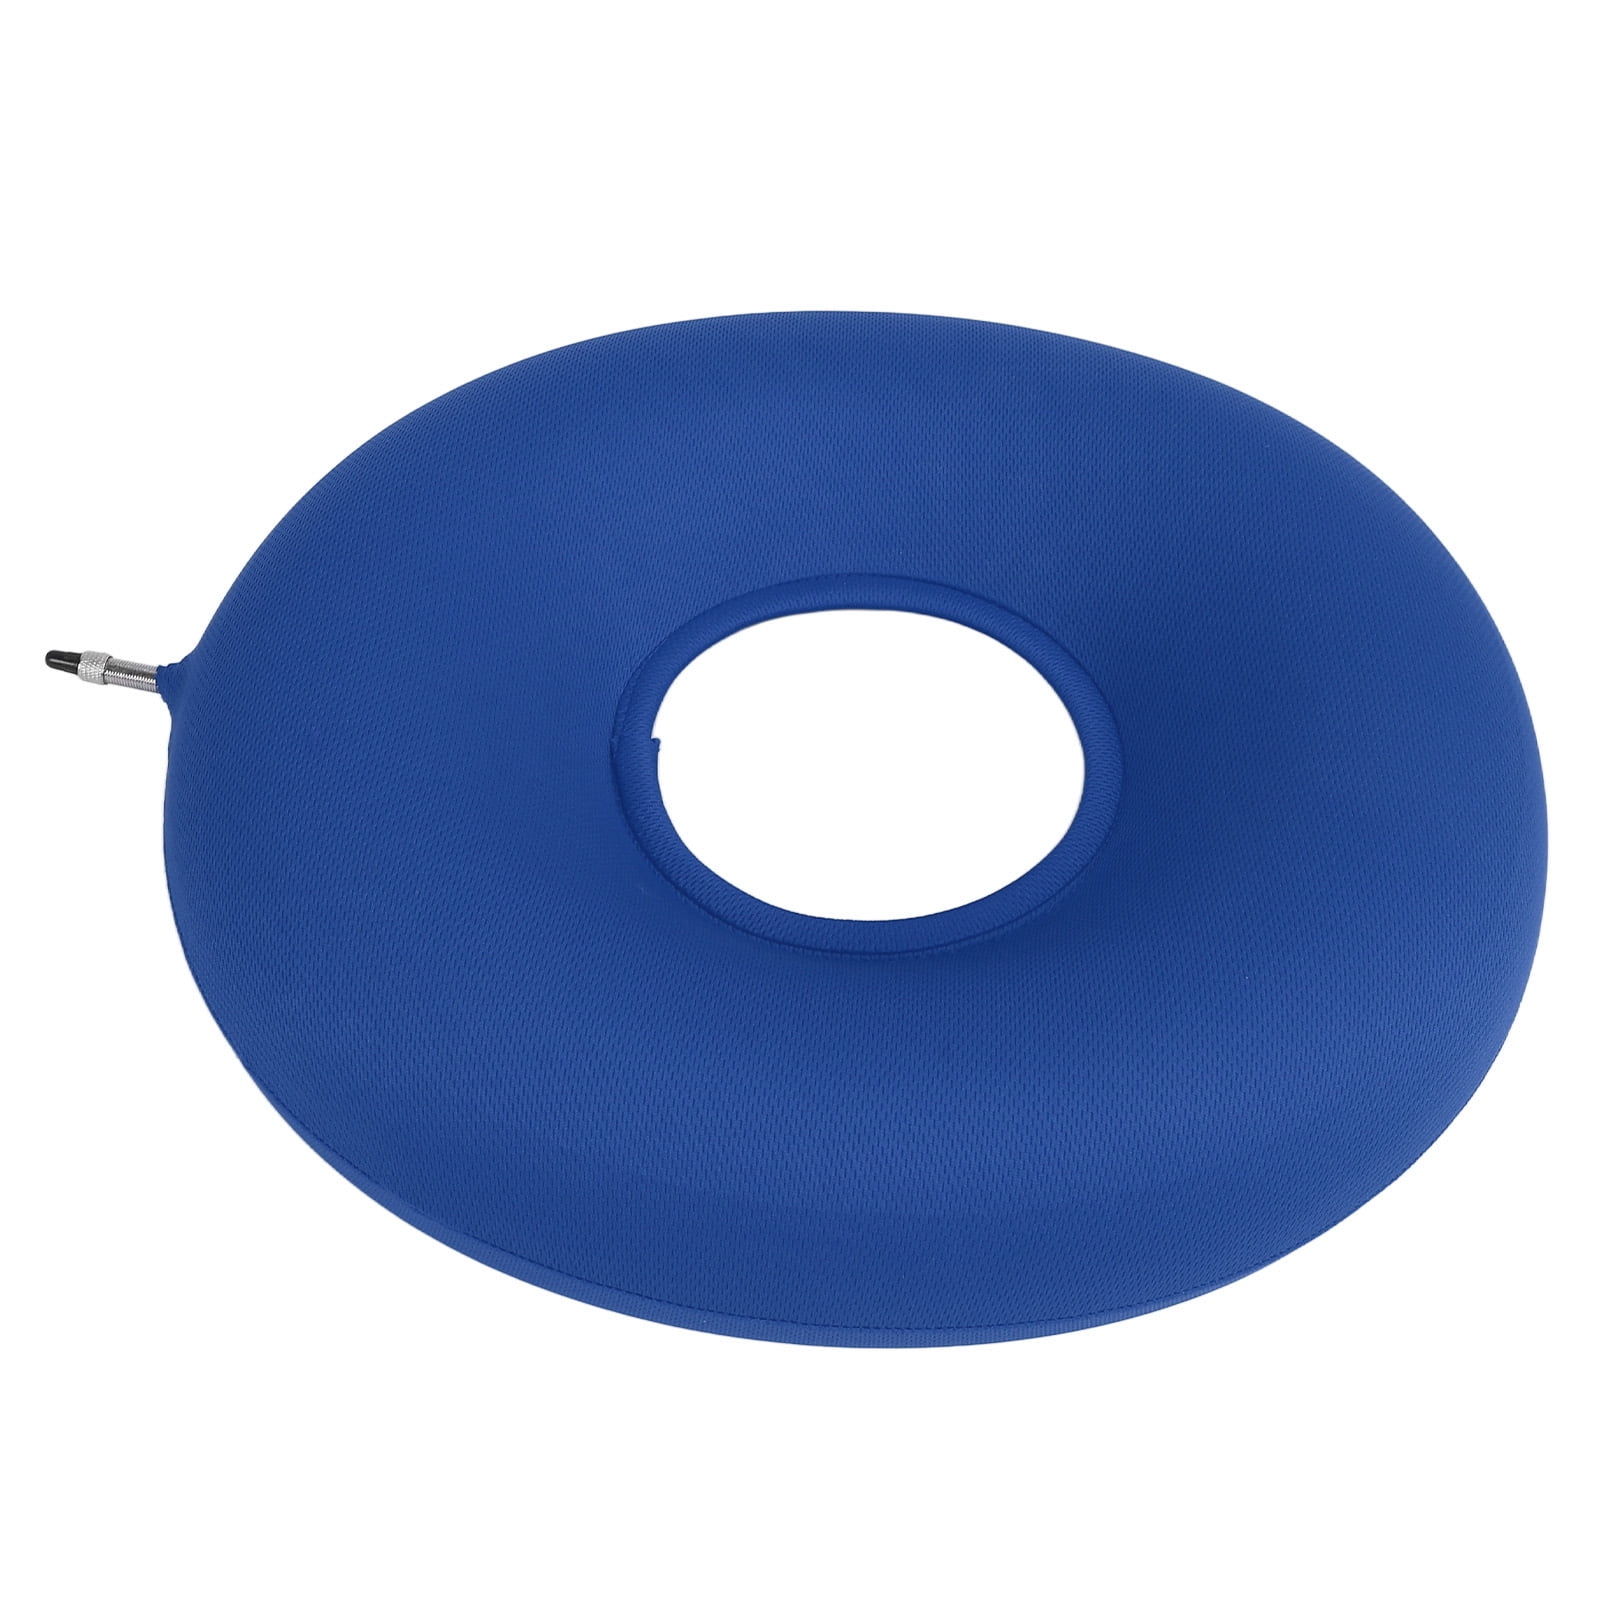 Inflatable Donut Cushion Seat, Portable Butt Hemorrhoid Pillow:  Anti-decubitus Pad-breathable Seat Cushion